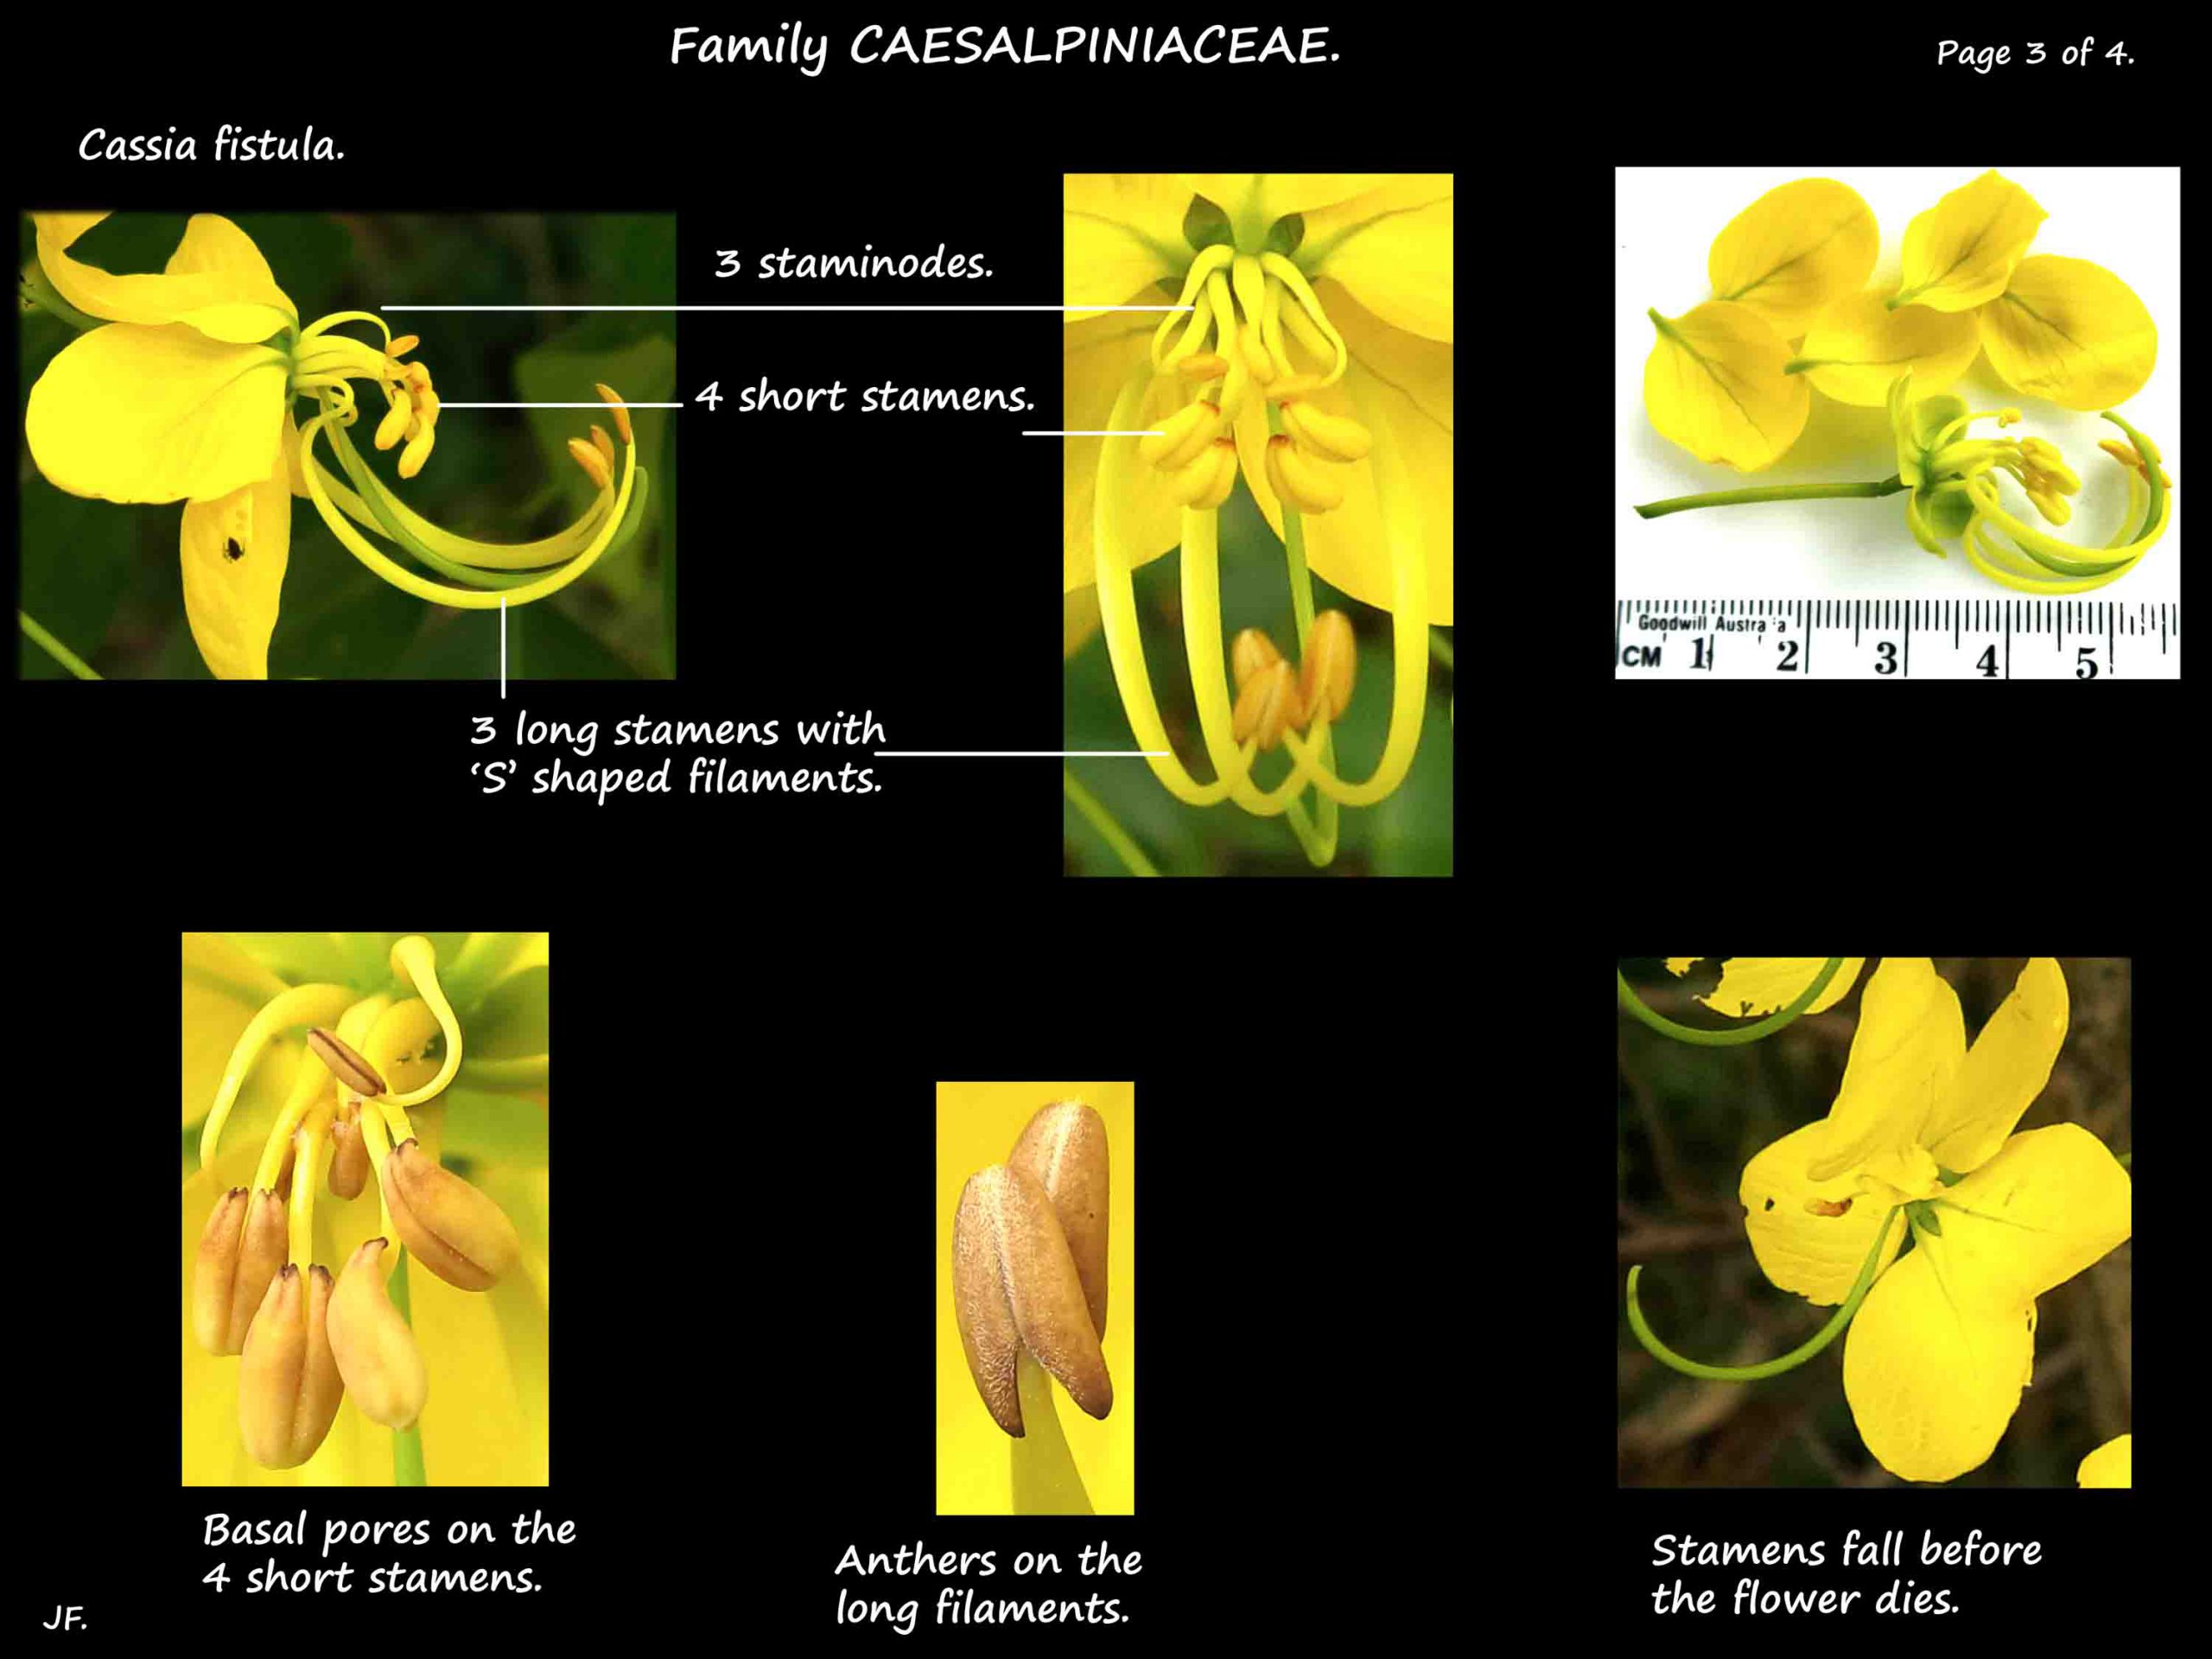 3 Cassia fistula stamens